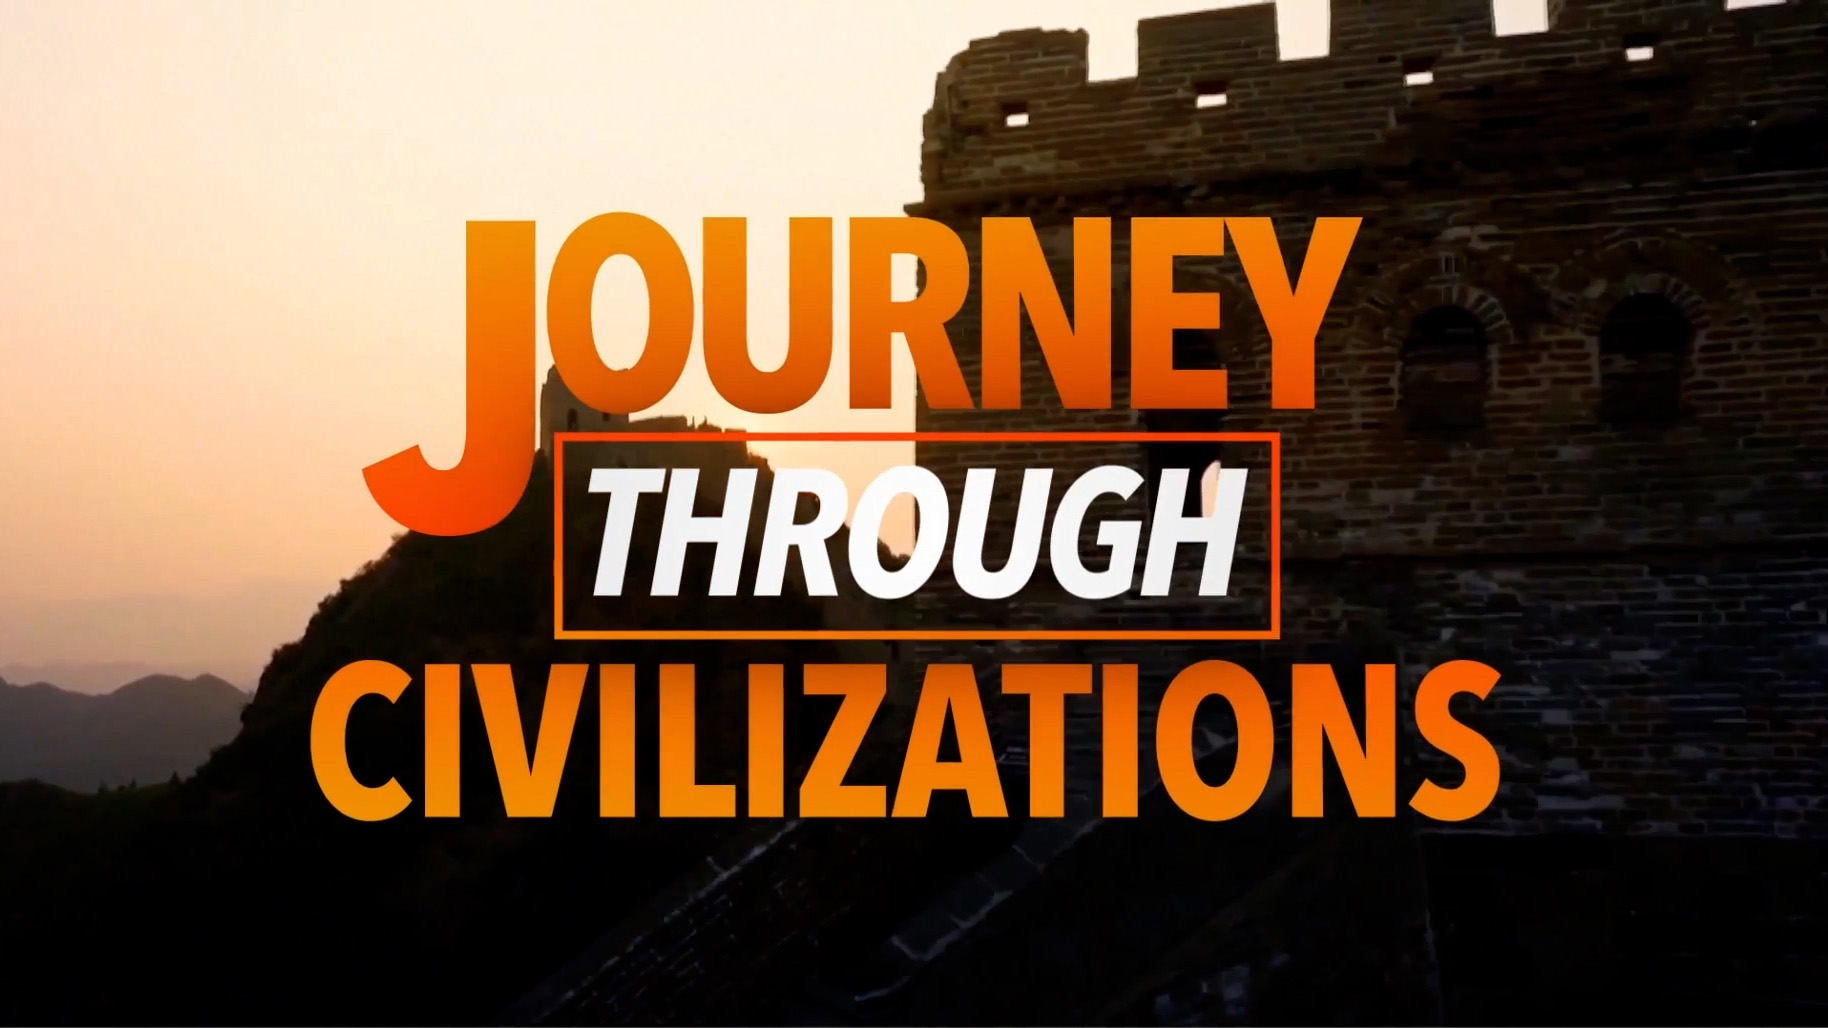 The ‘Journey through Civilizations’ exhibit held at the UN Headquarters